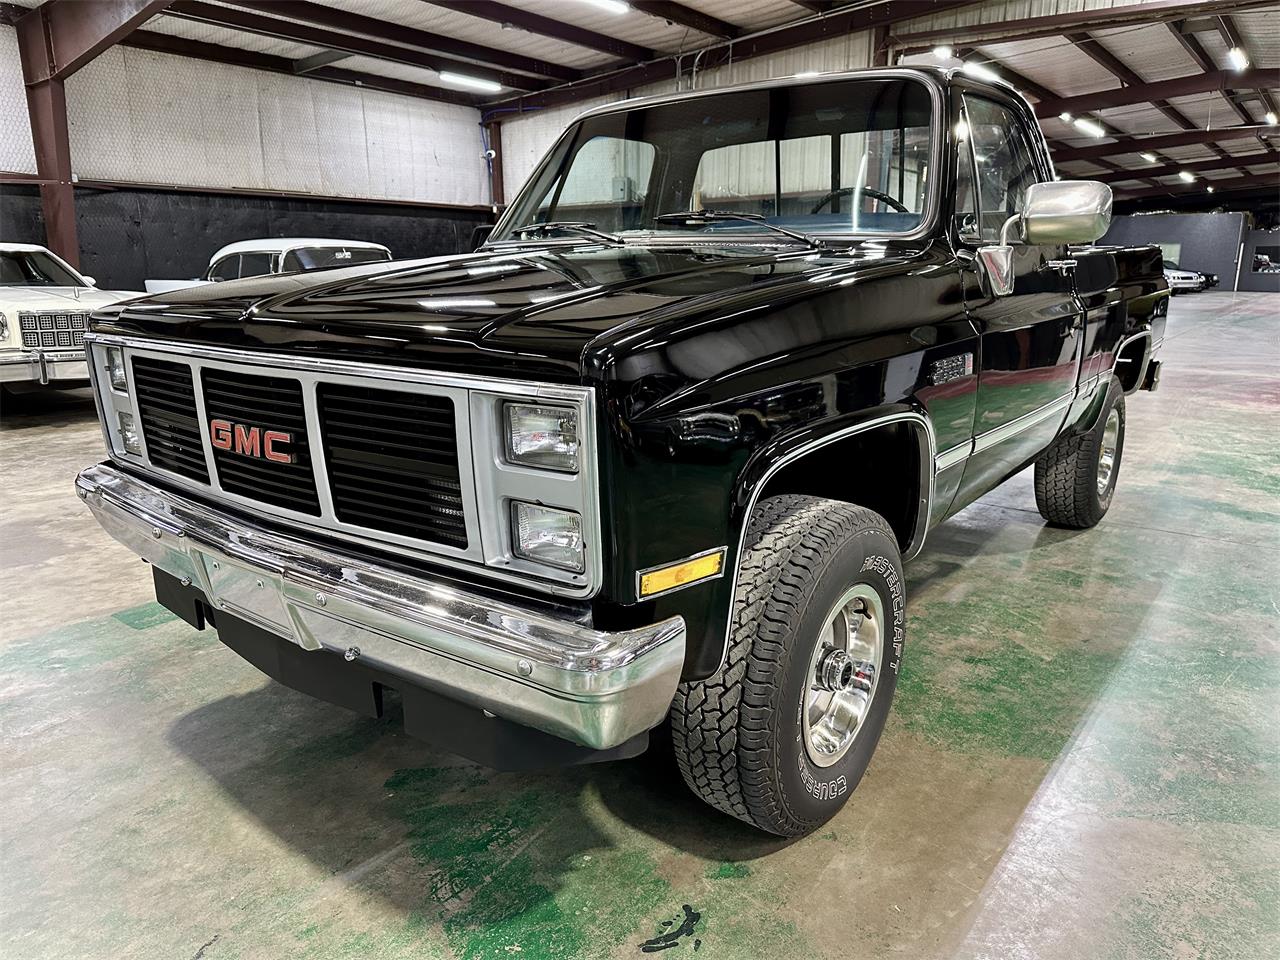 For Sale: 1985 GMC K1500 in Sherman, Texas for sale in Sherman, TX